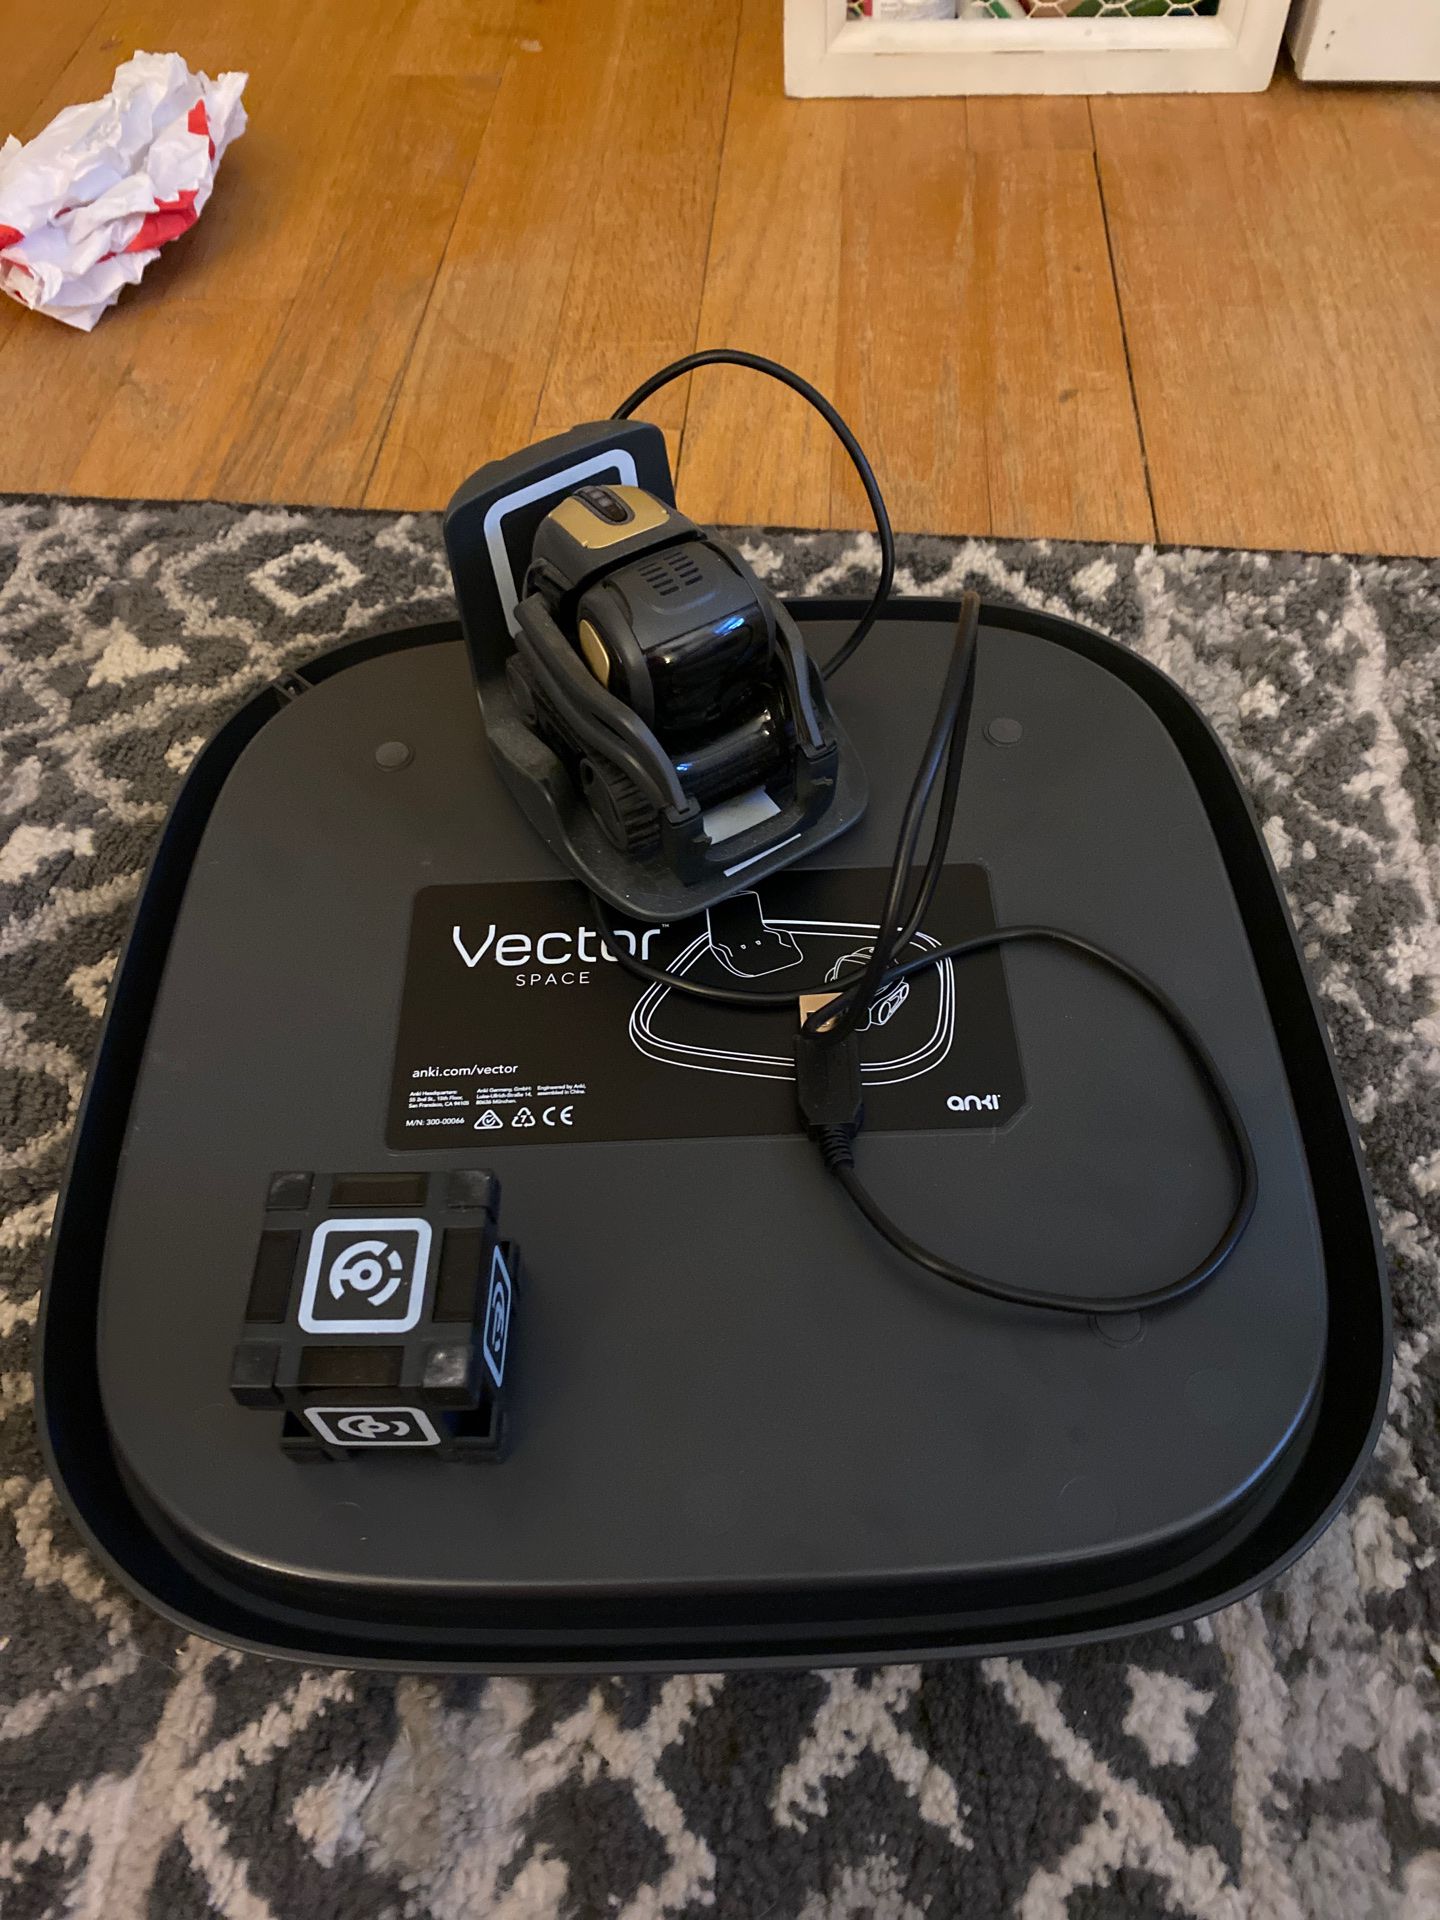 Vector robot toy